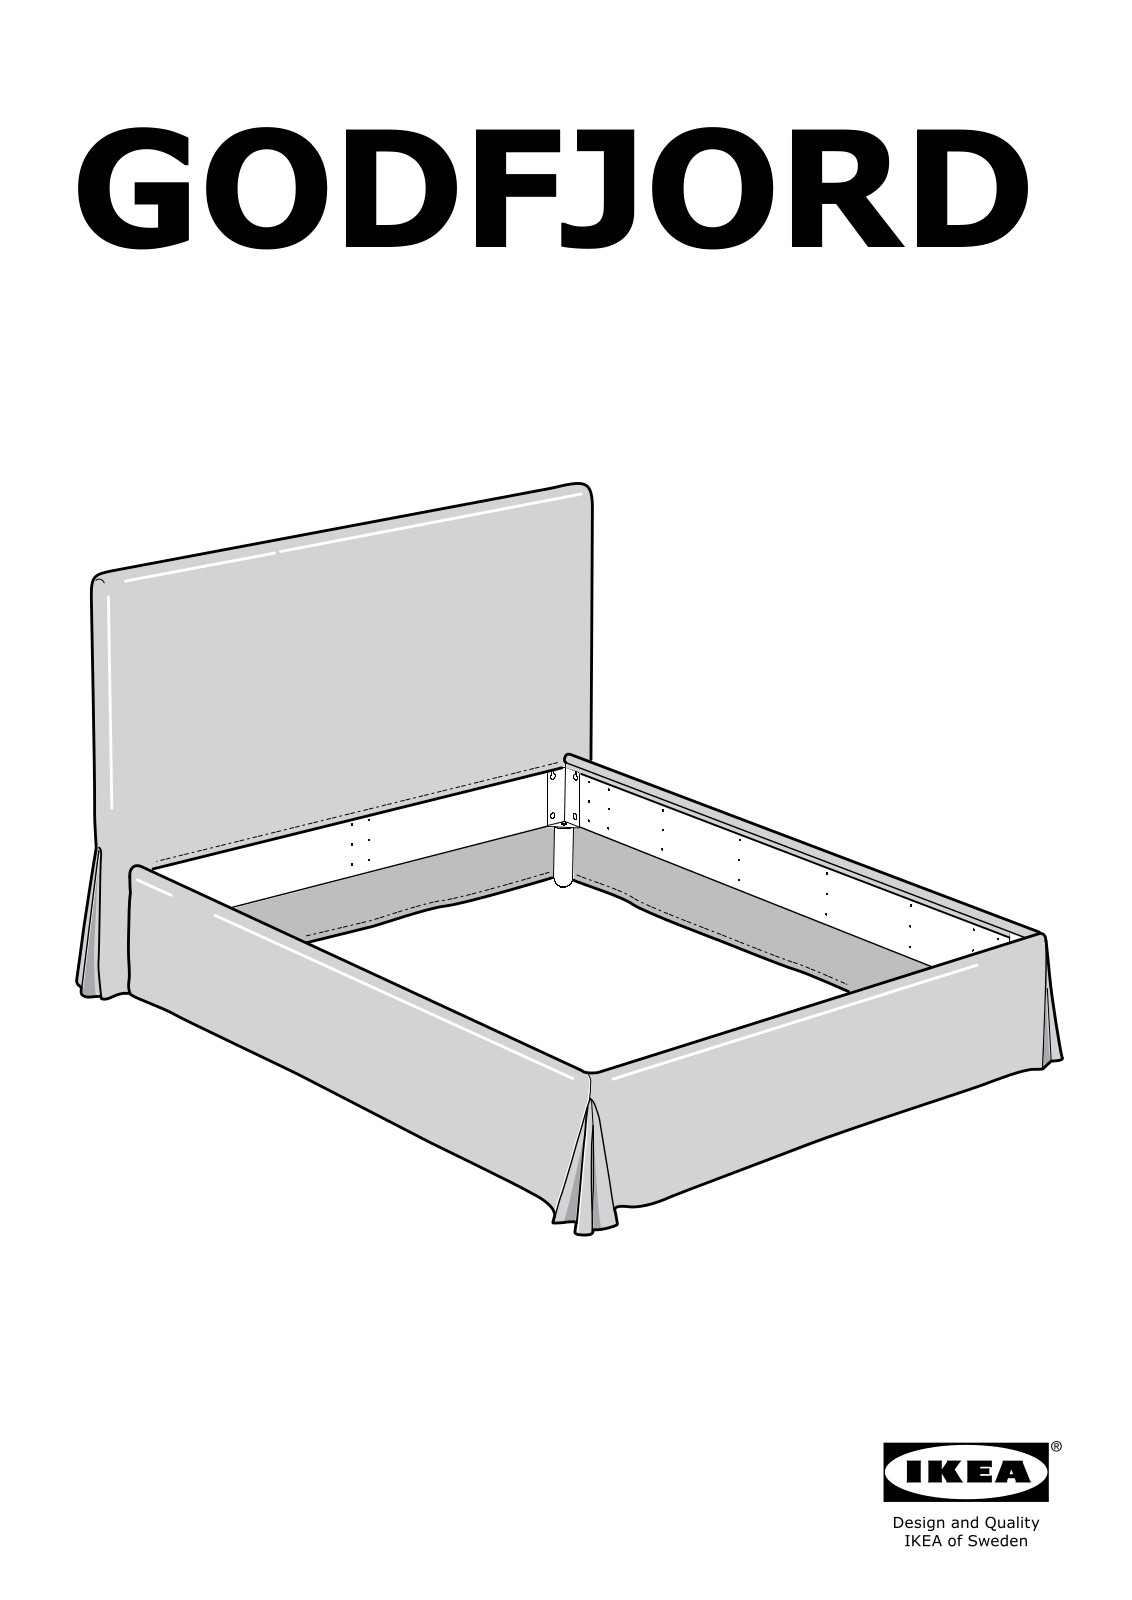 IKEA GODFJORD Bed frame Assembly Instruction